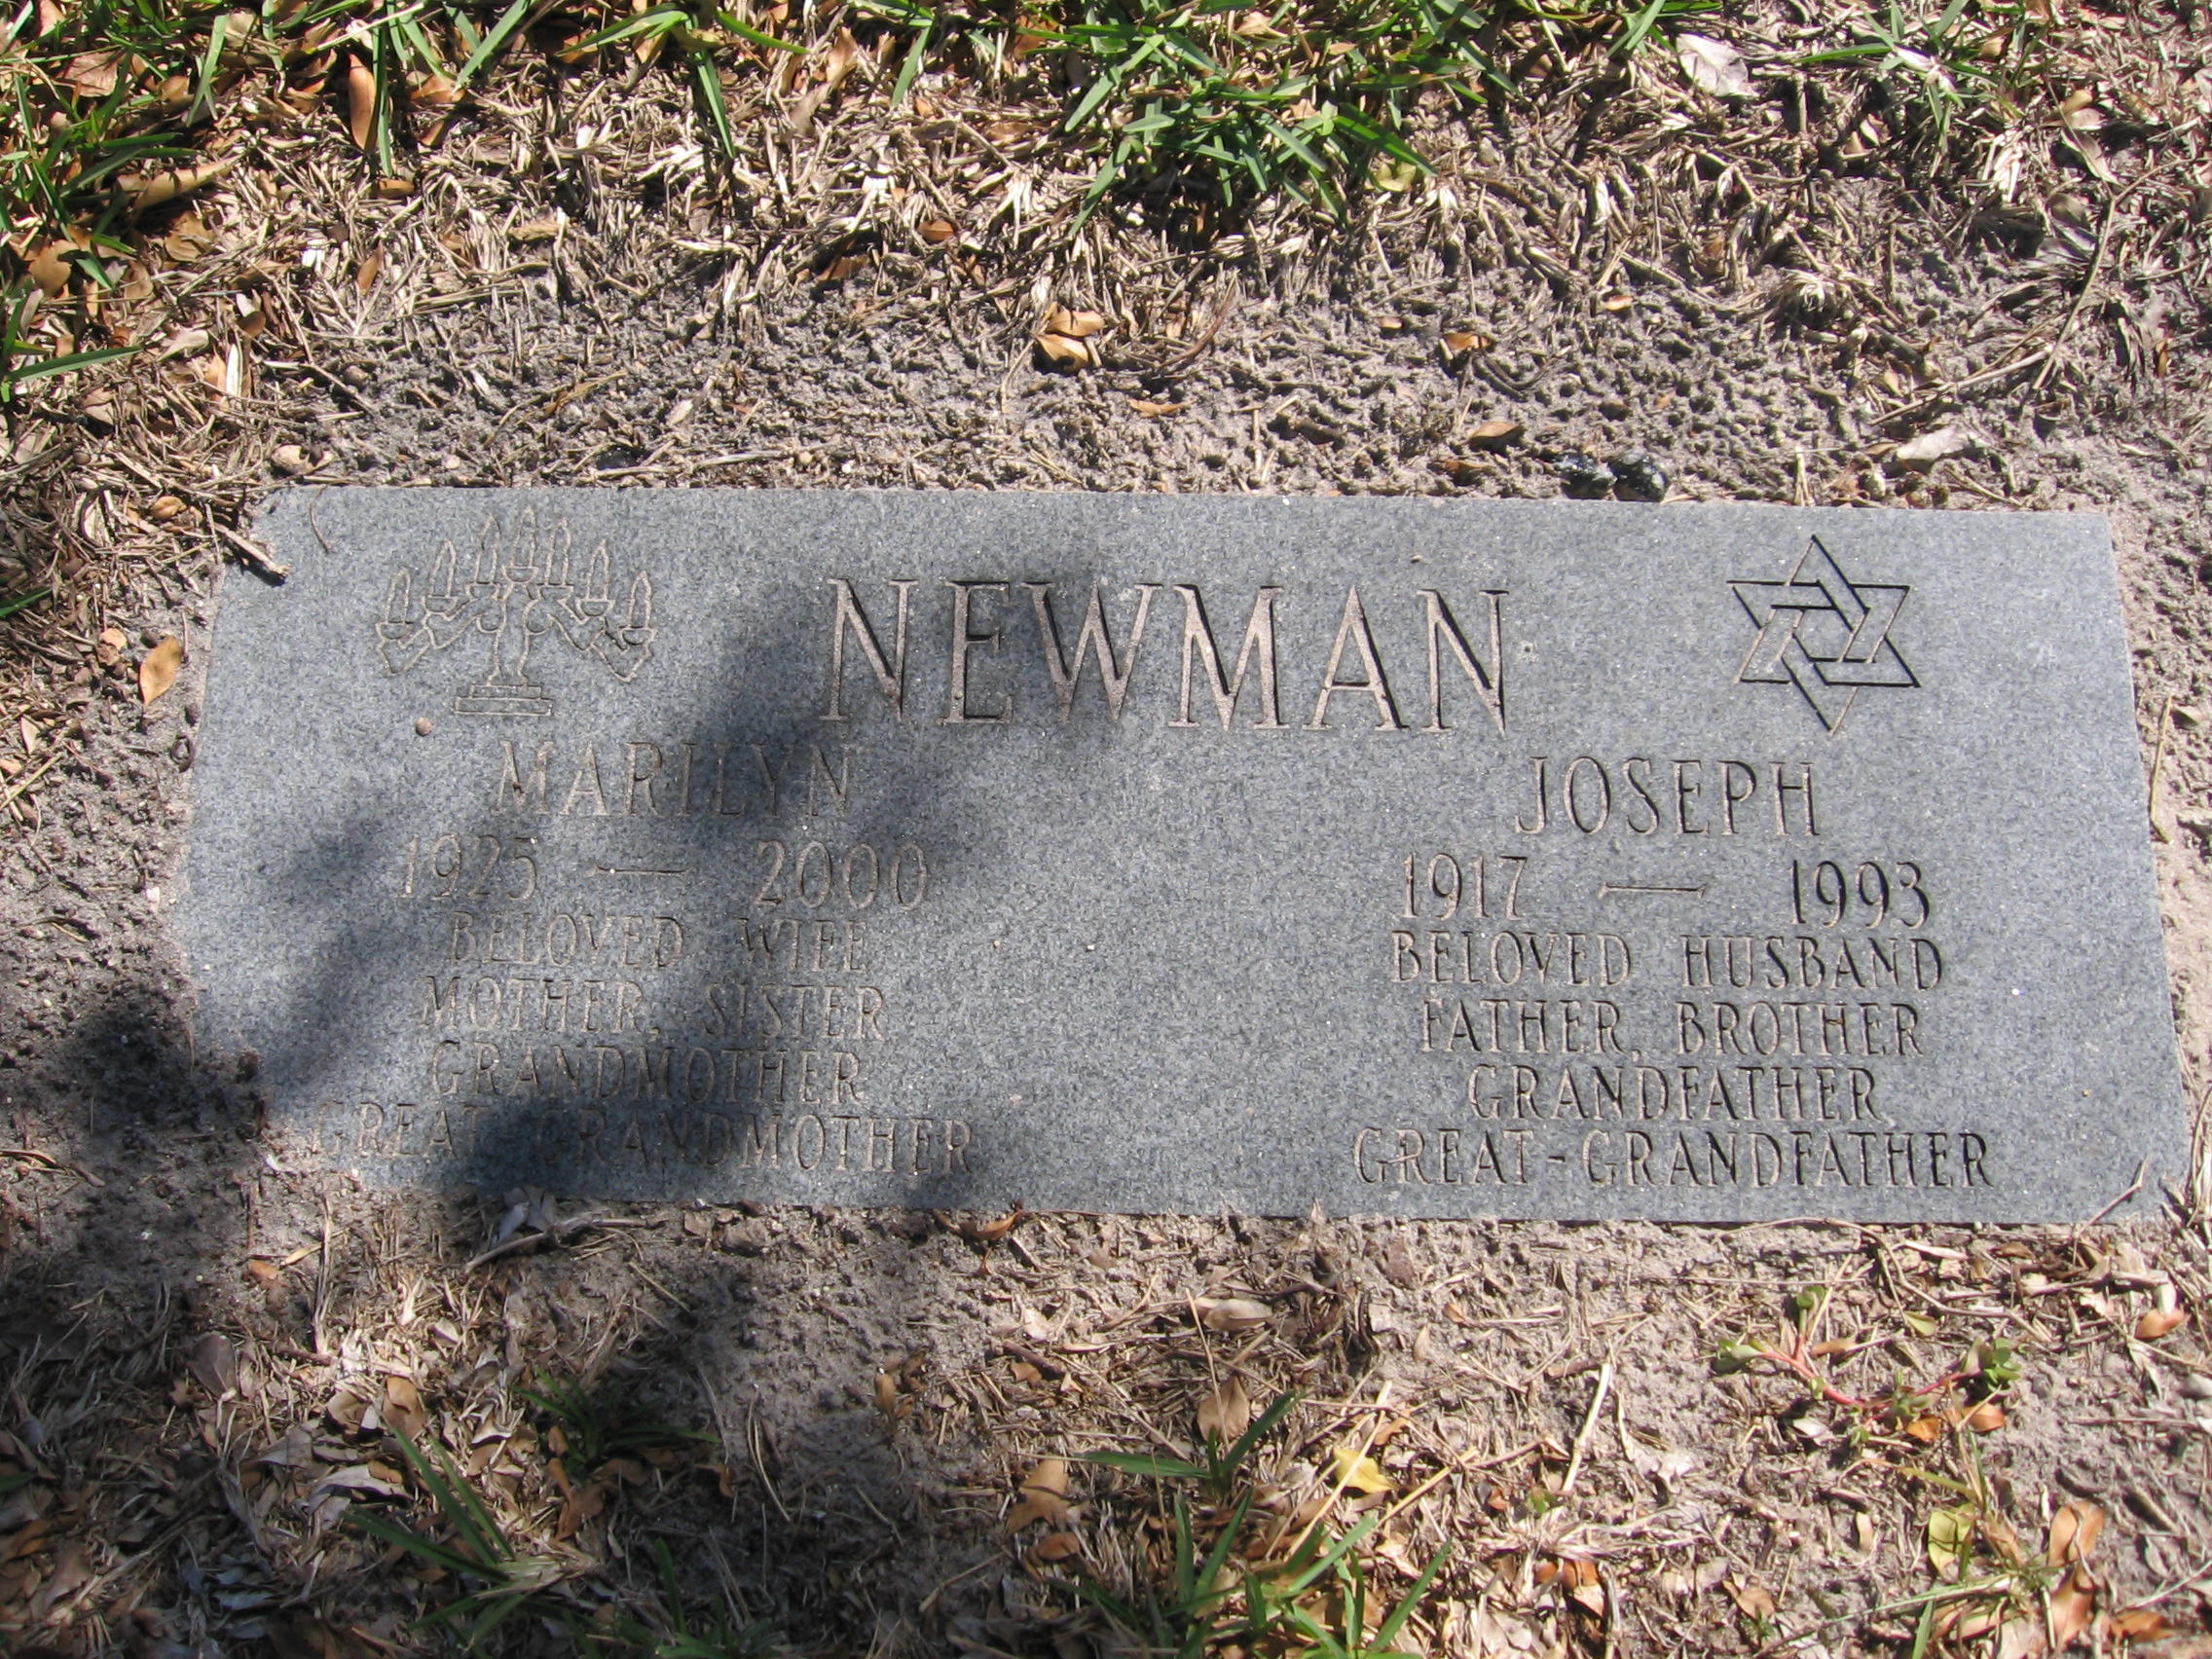 Joseph Newman